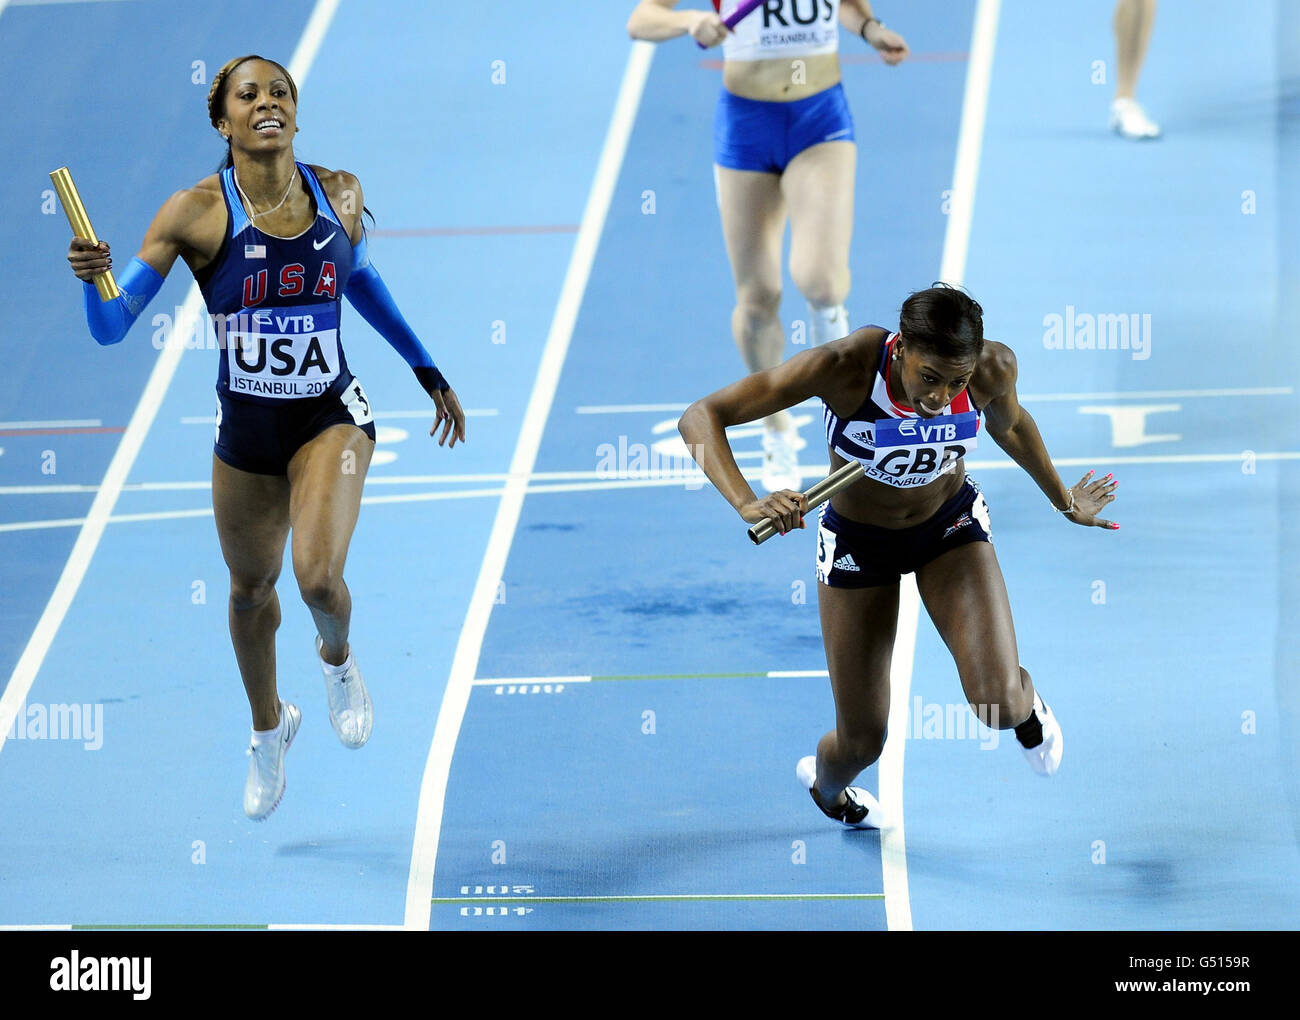 Atletica - IAAF Campionati mondiali Indoor - Giorno 3 - Atakoy atletica Arena Foto Stock